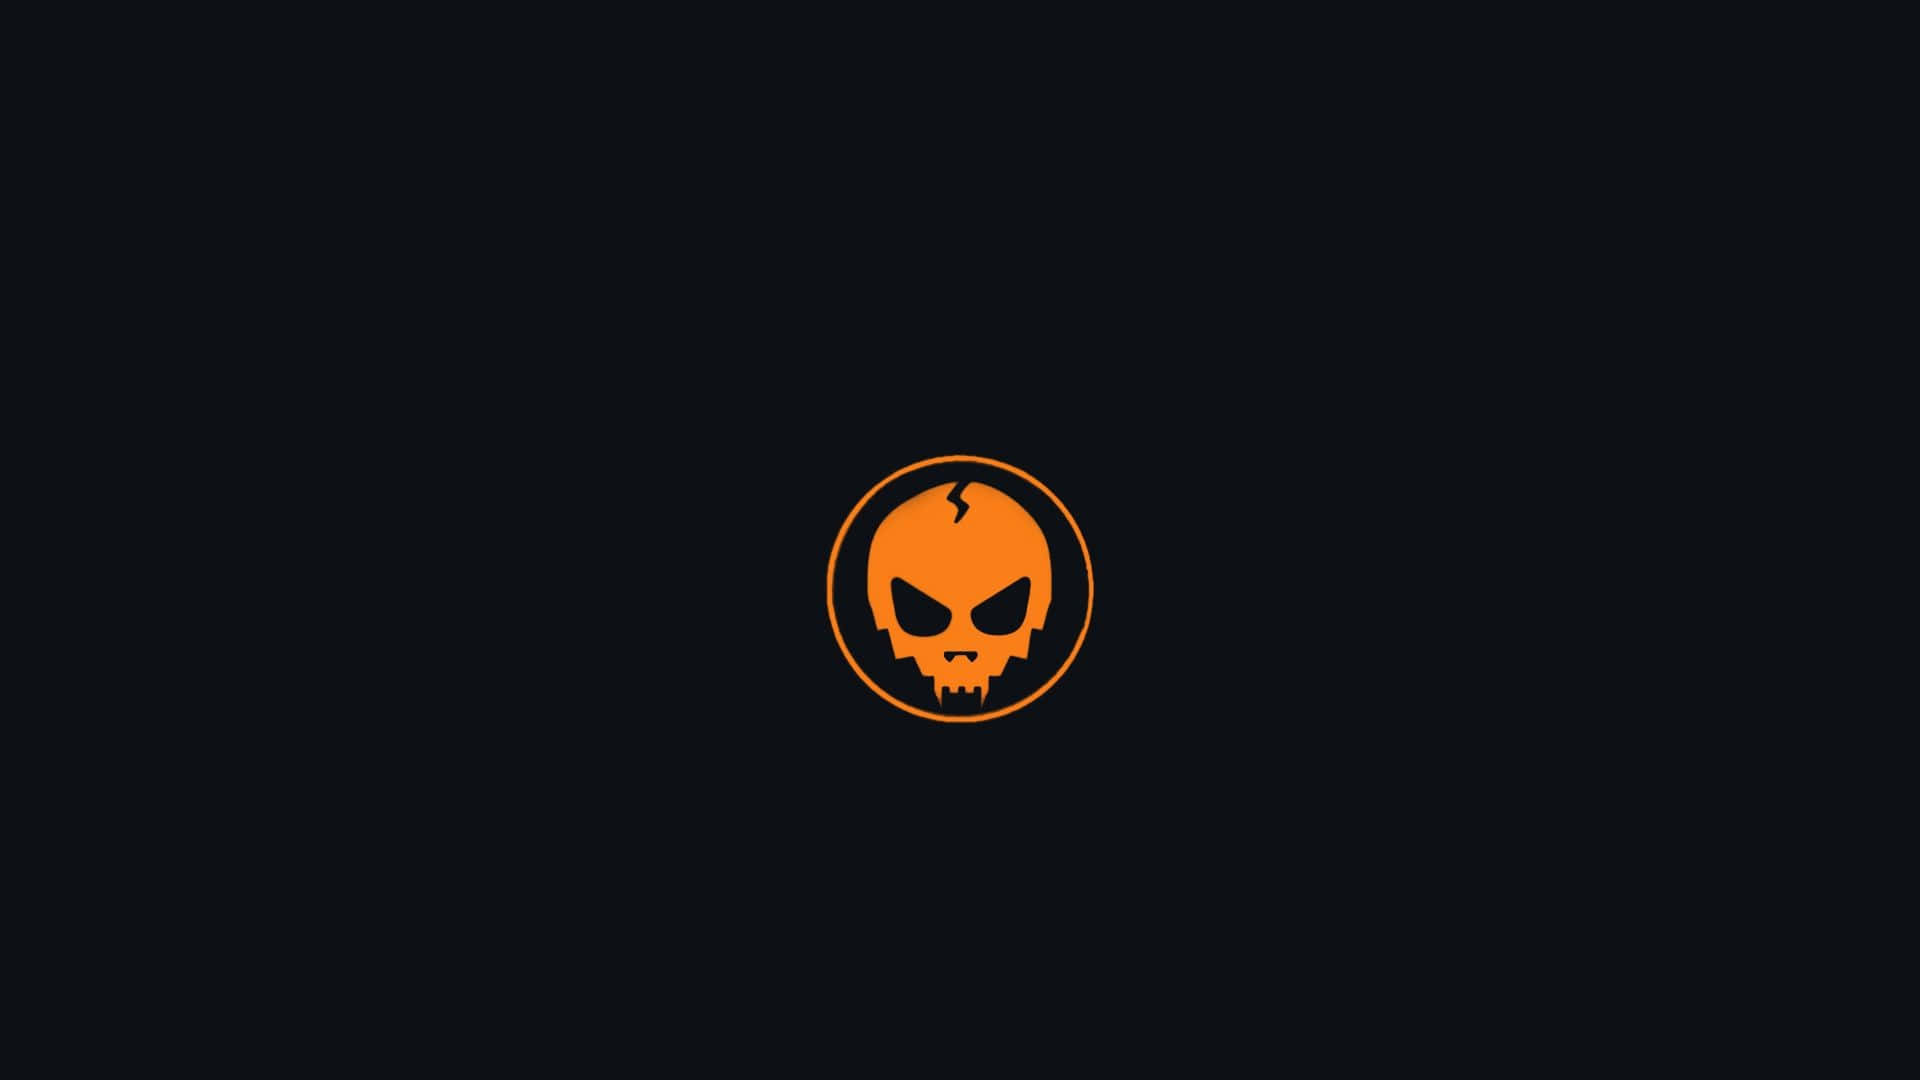 A Skull Logo On A Black Background